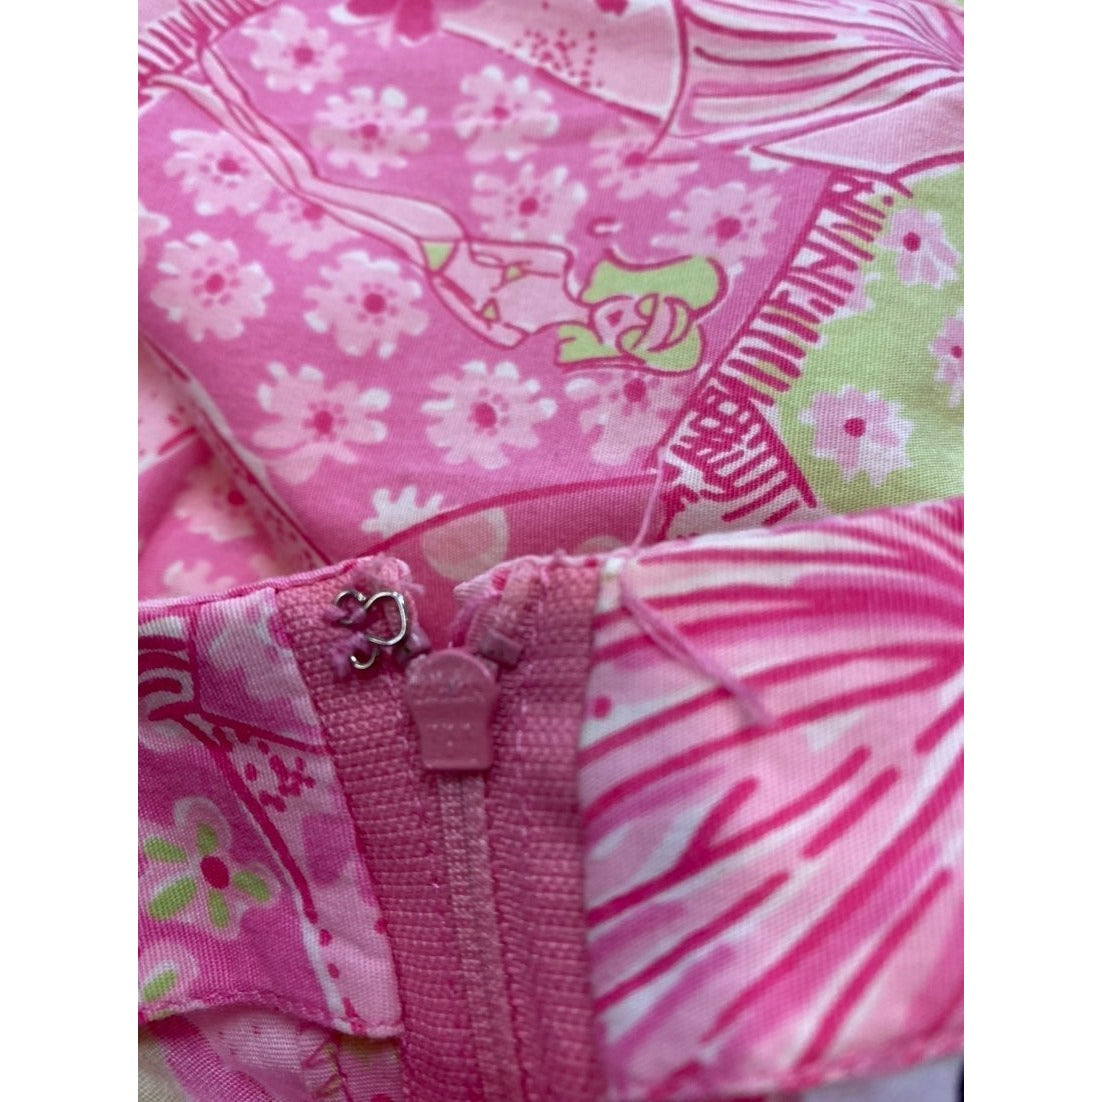 Lilly Pulitzer skirt beach pink